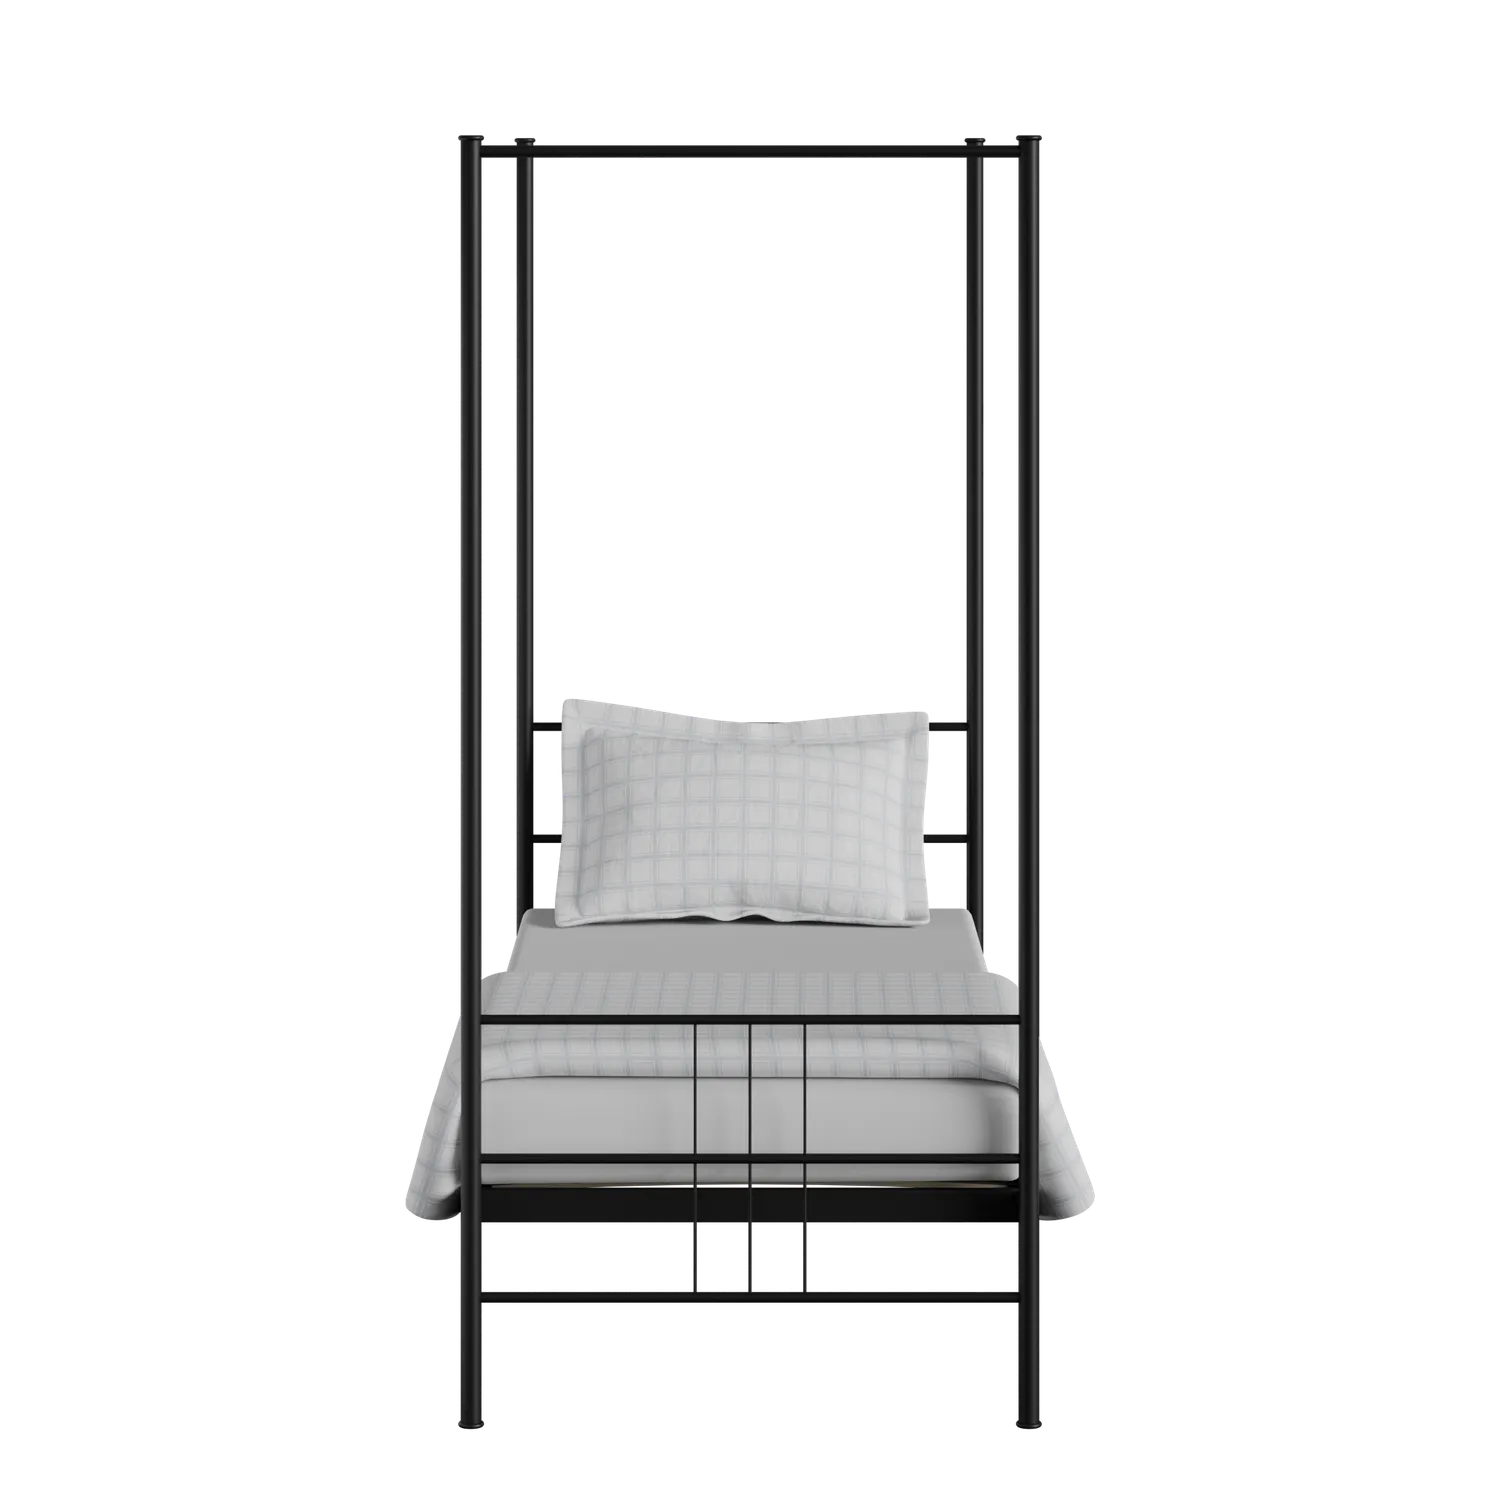 Toulon iron/metal single bed in black